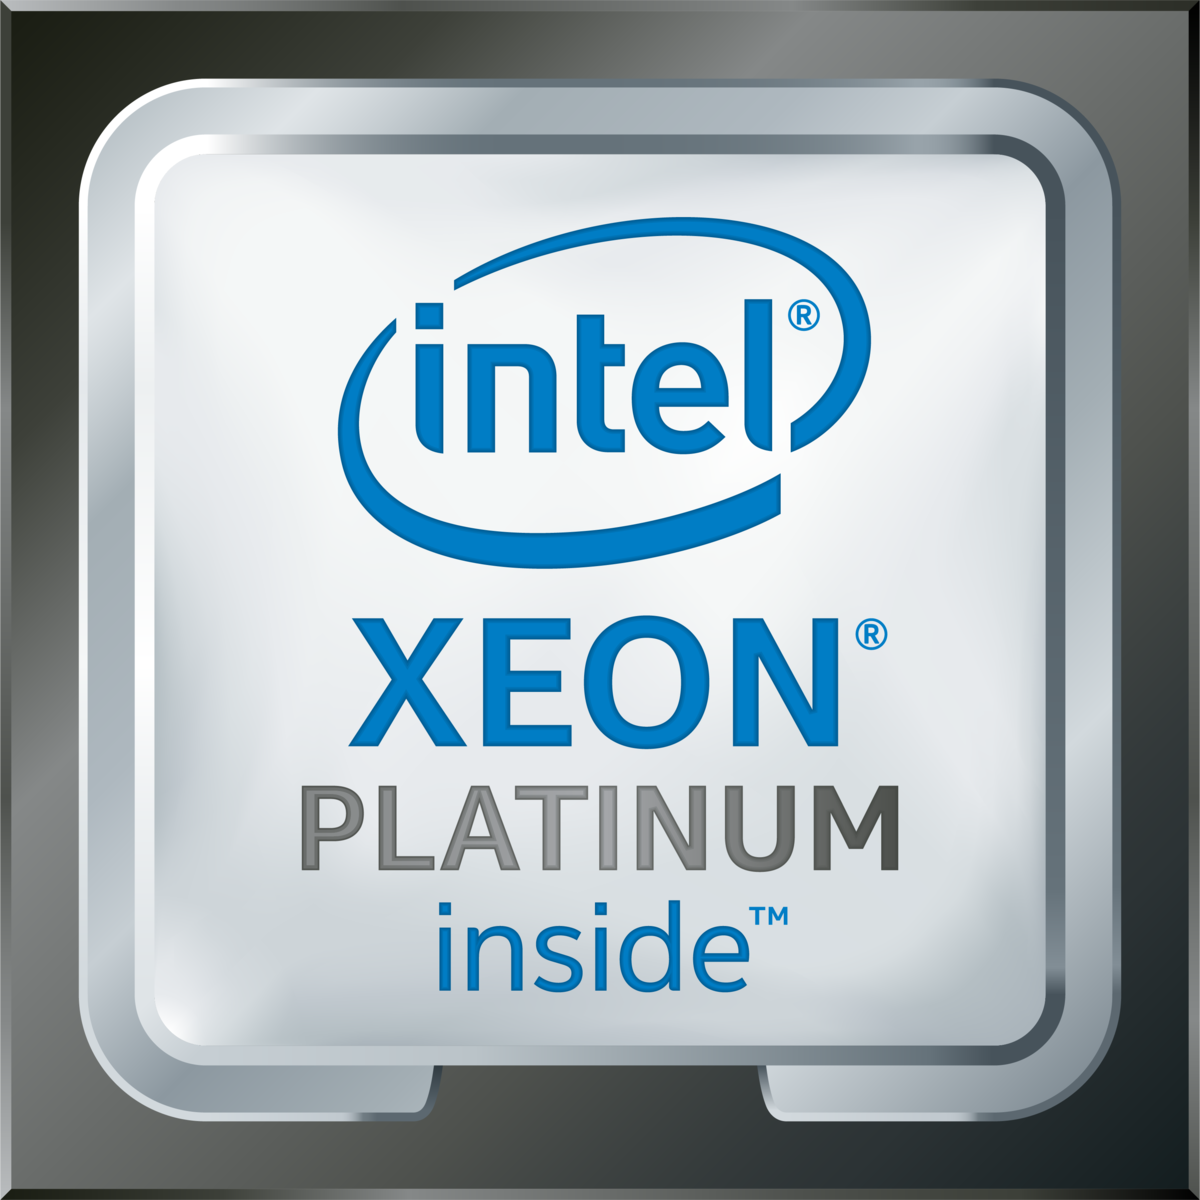 Intel(R) Xeon(R) Platinum 8175M CPU @ 2.50GHz's logo